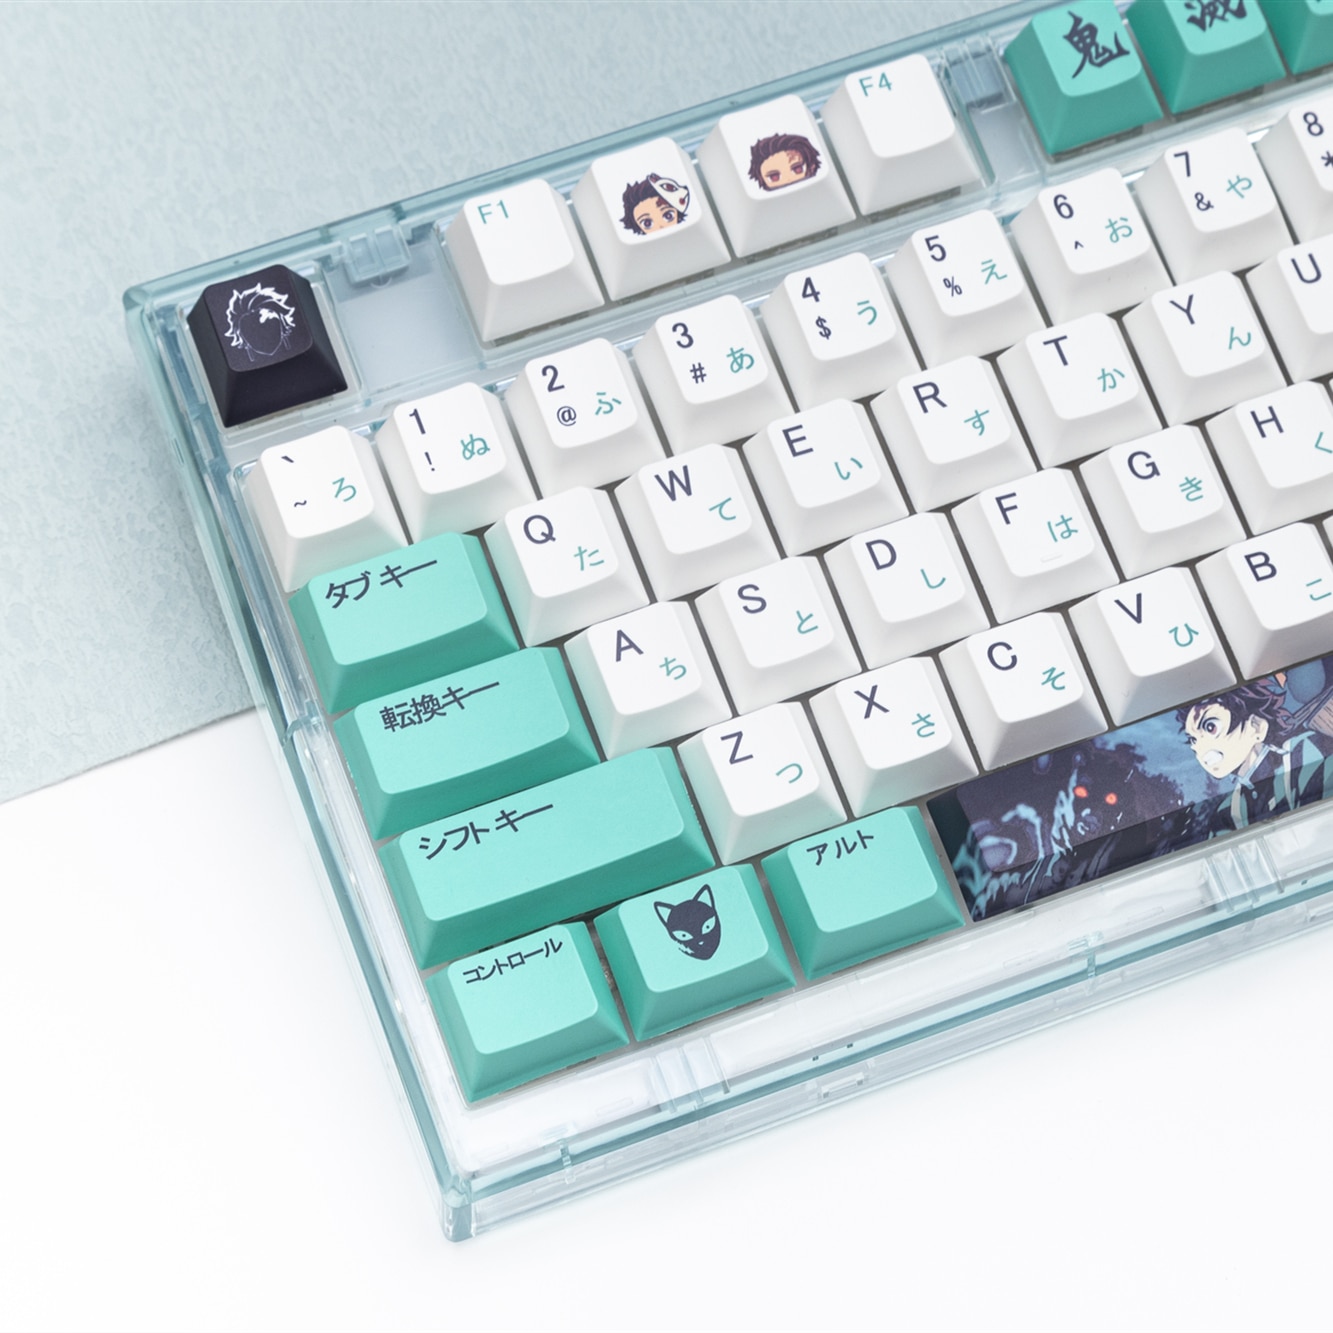 Demon Slayer Keycap Set for DIY Mechanical Gaming Keyboard 5 Sided Dye Sublimation Pbt Cherry Profile - Anime Keyboard